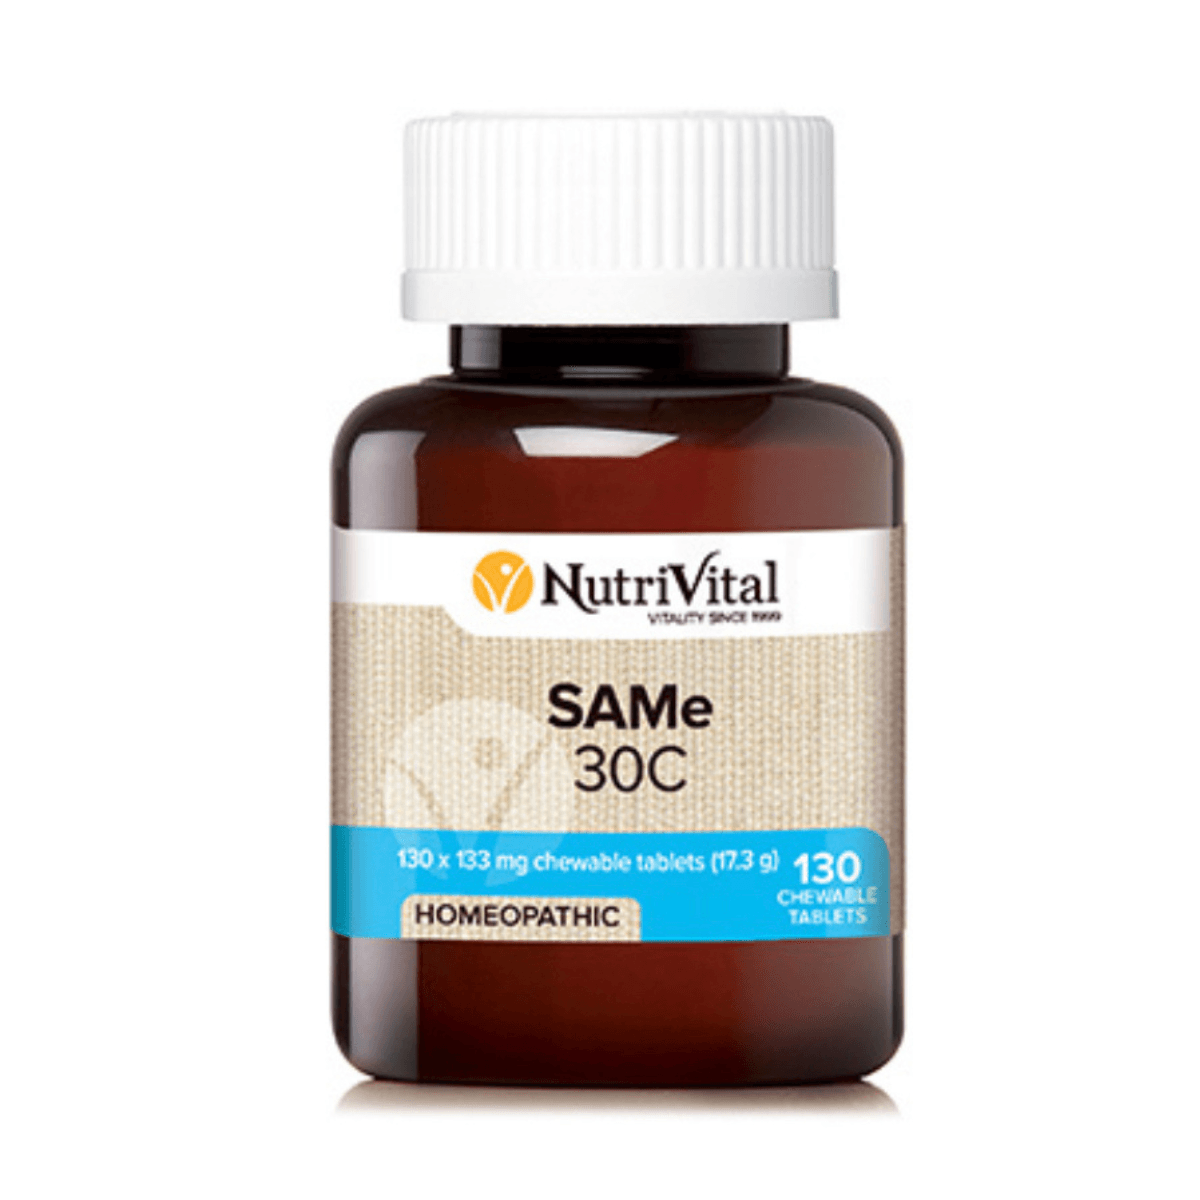 NutriVital Homeopathic SAMe 30C 130 Tablets - QVM Vitamins™